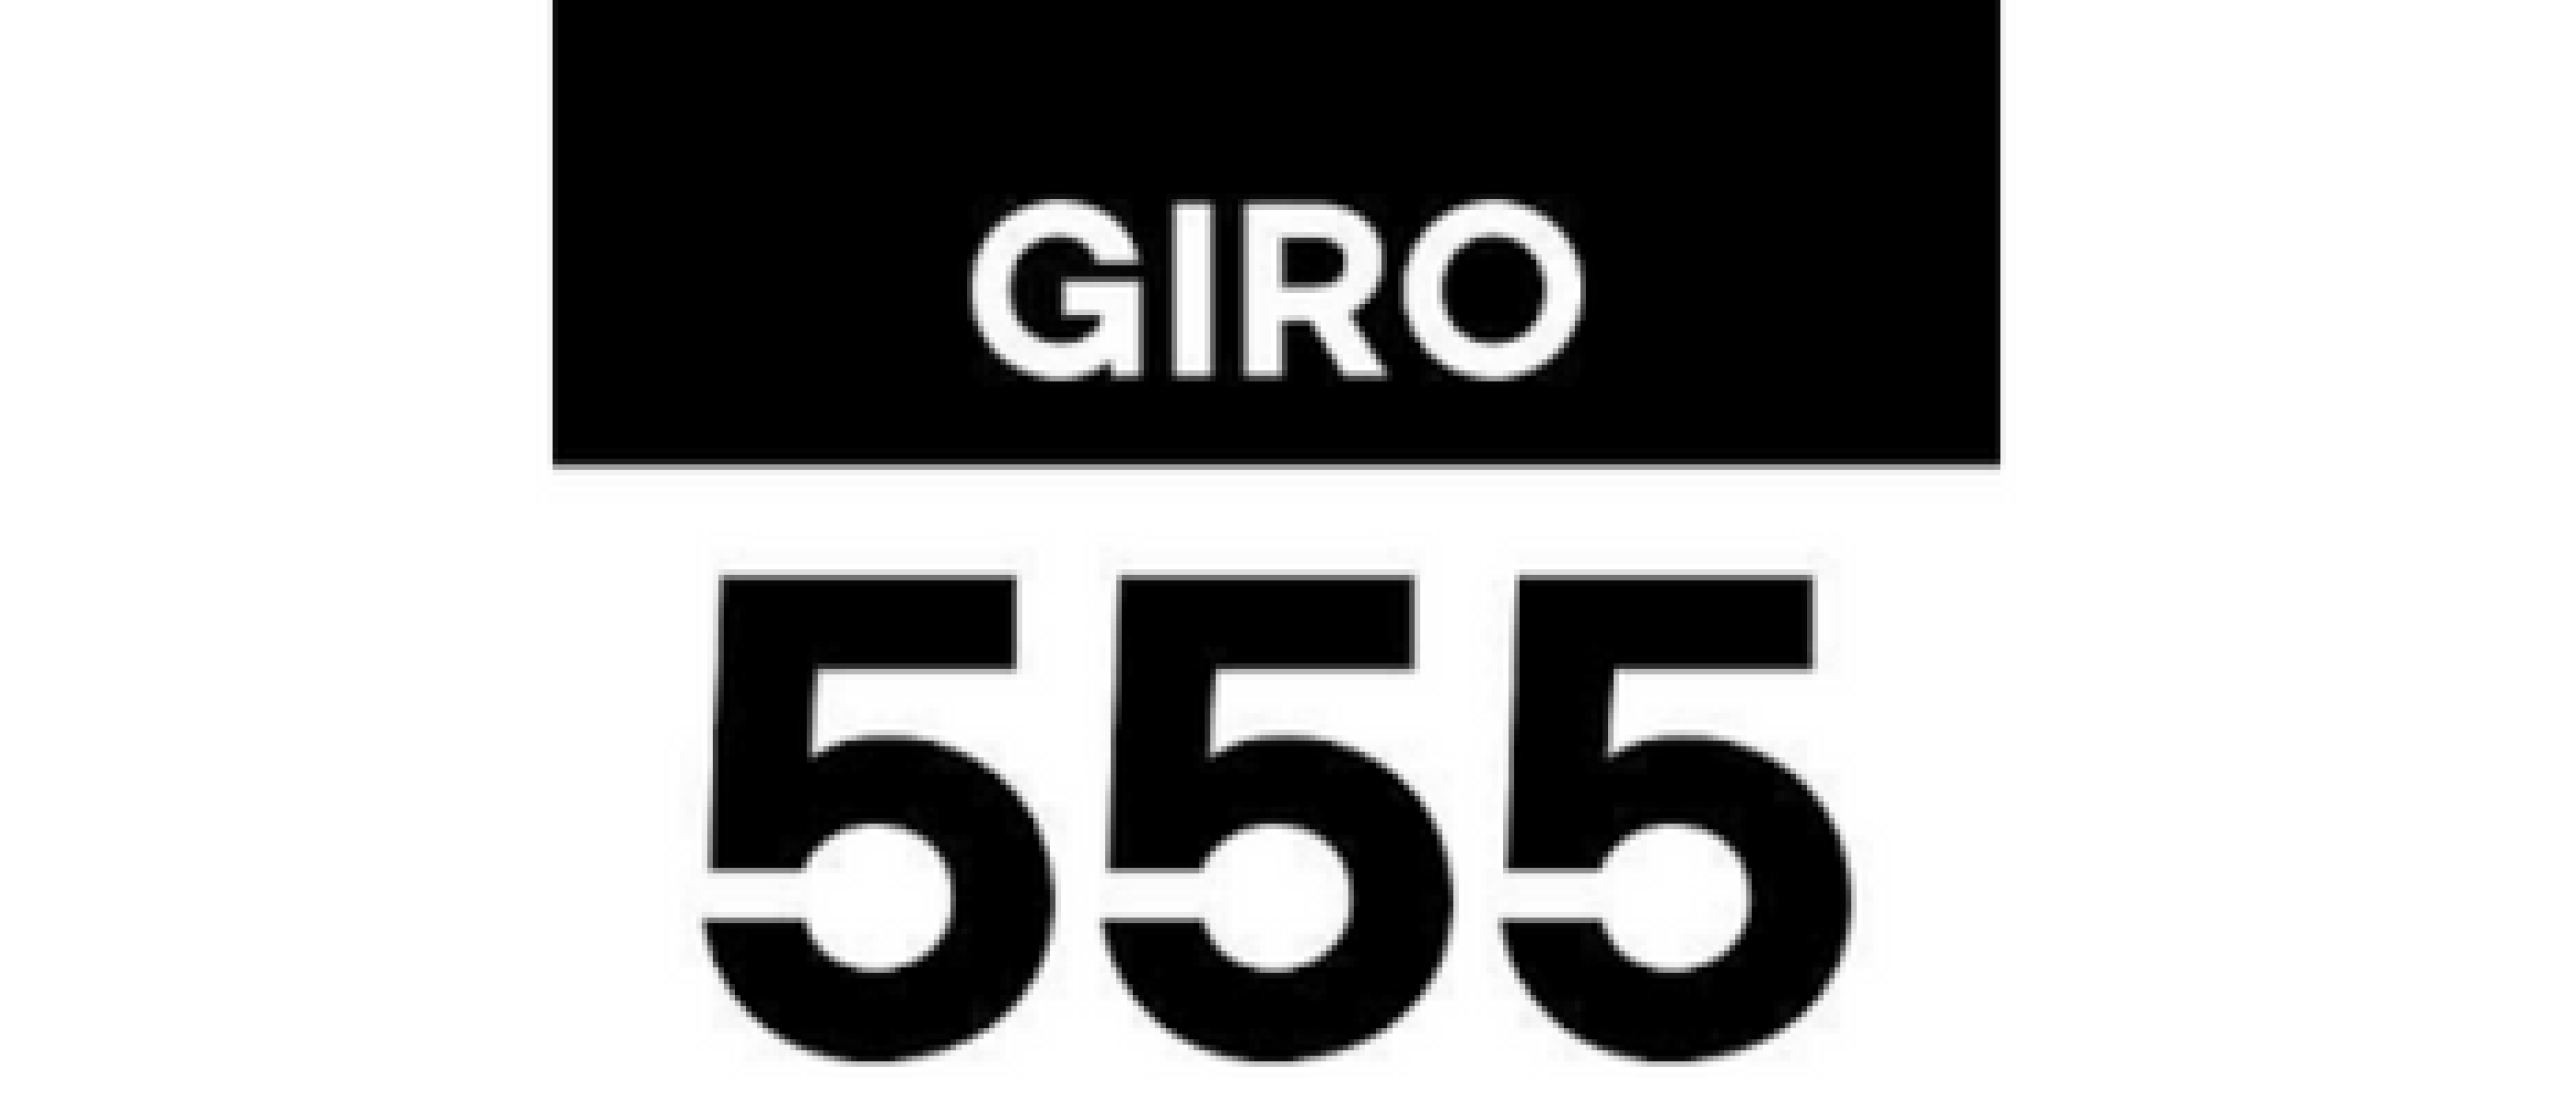 Taalprijsvraag: Gulle Gevers Giro555